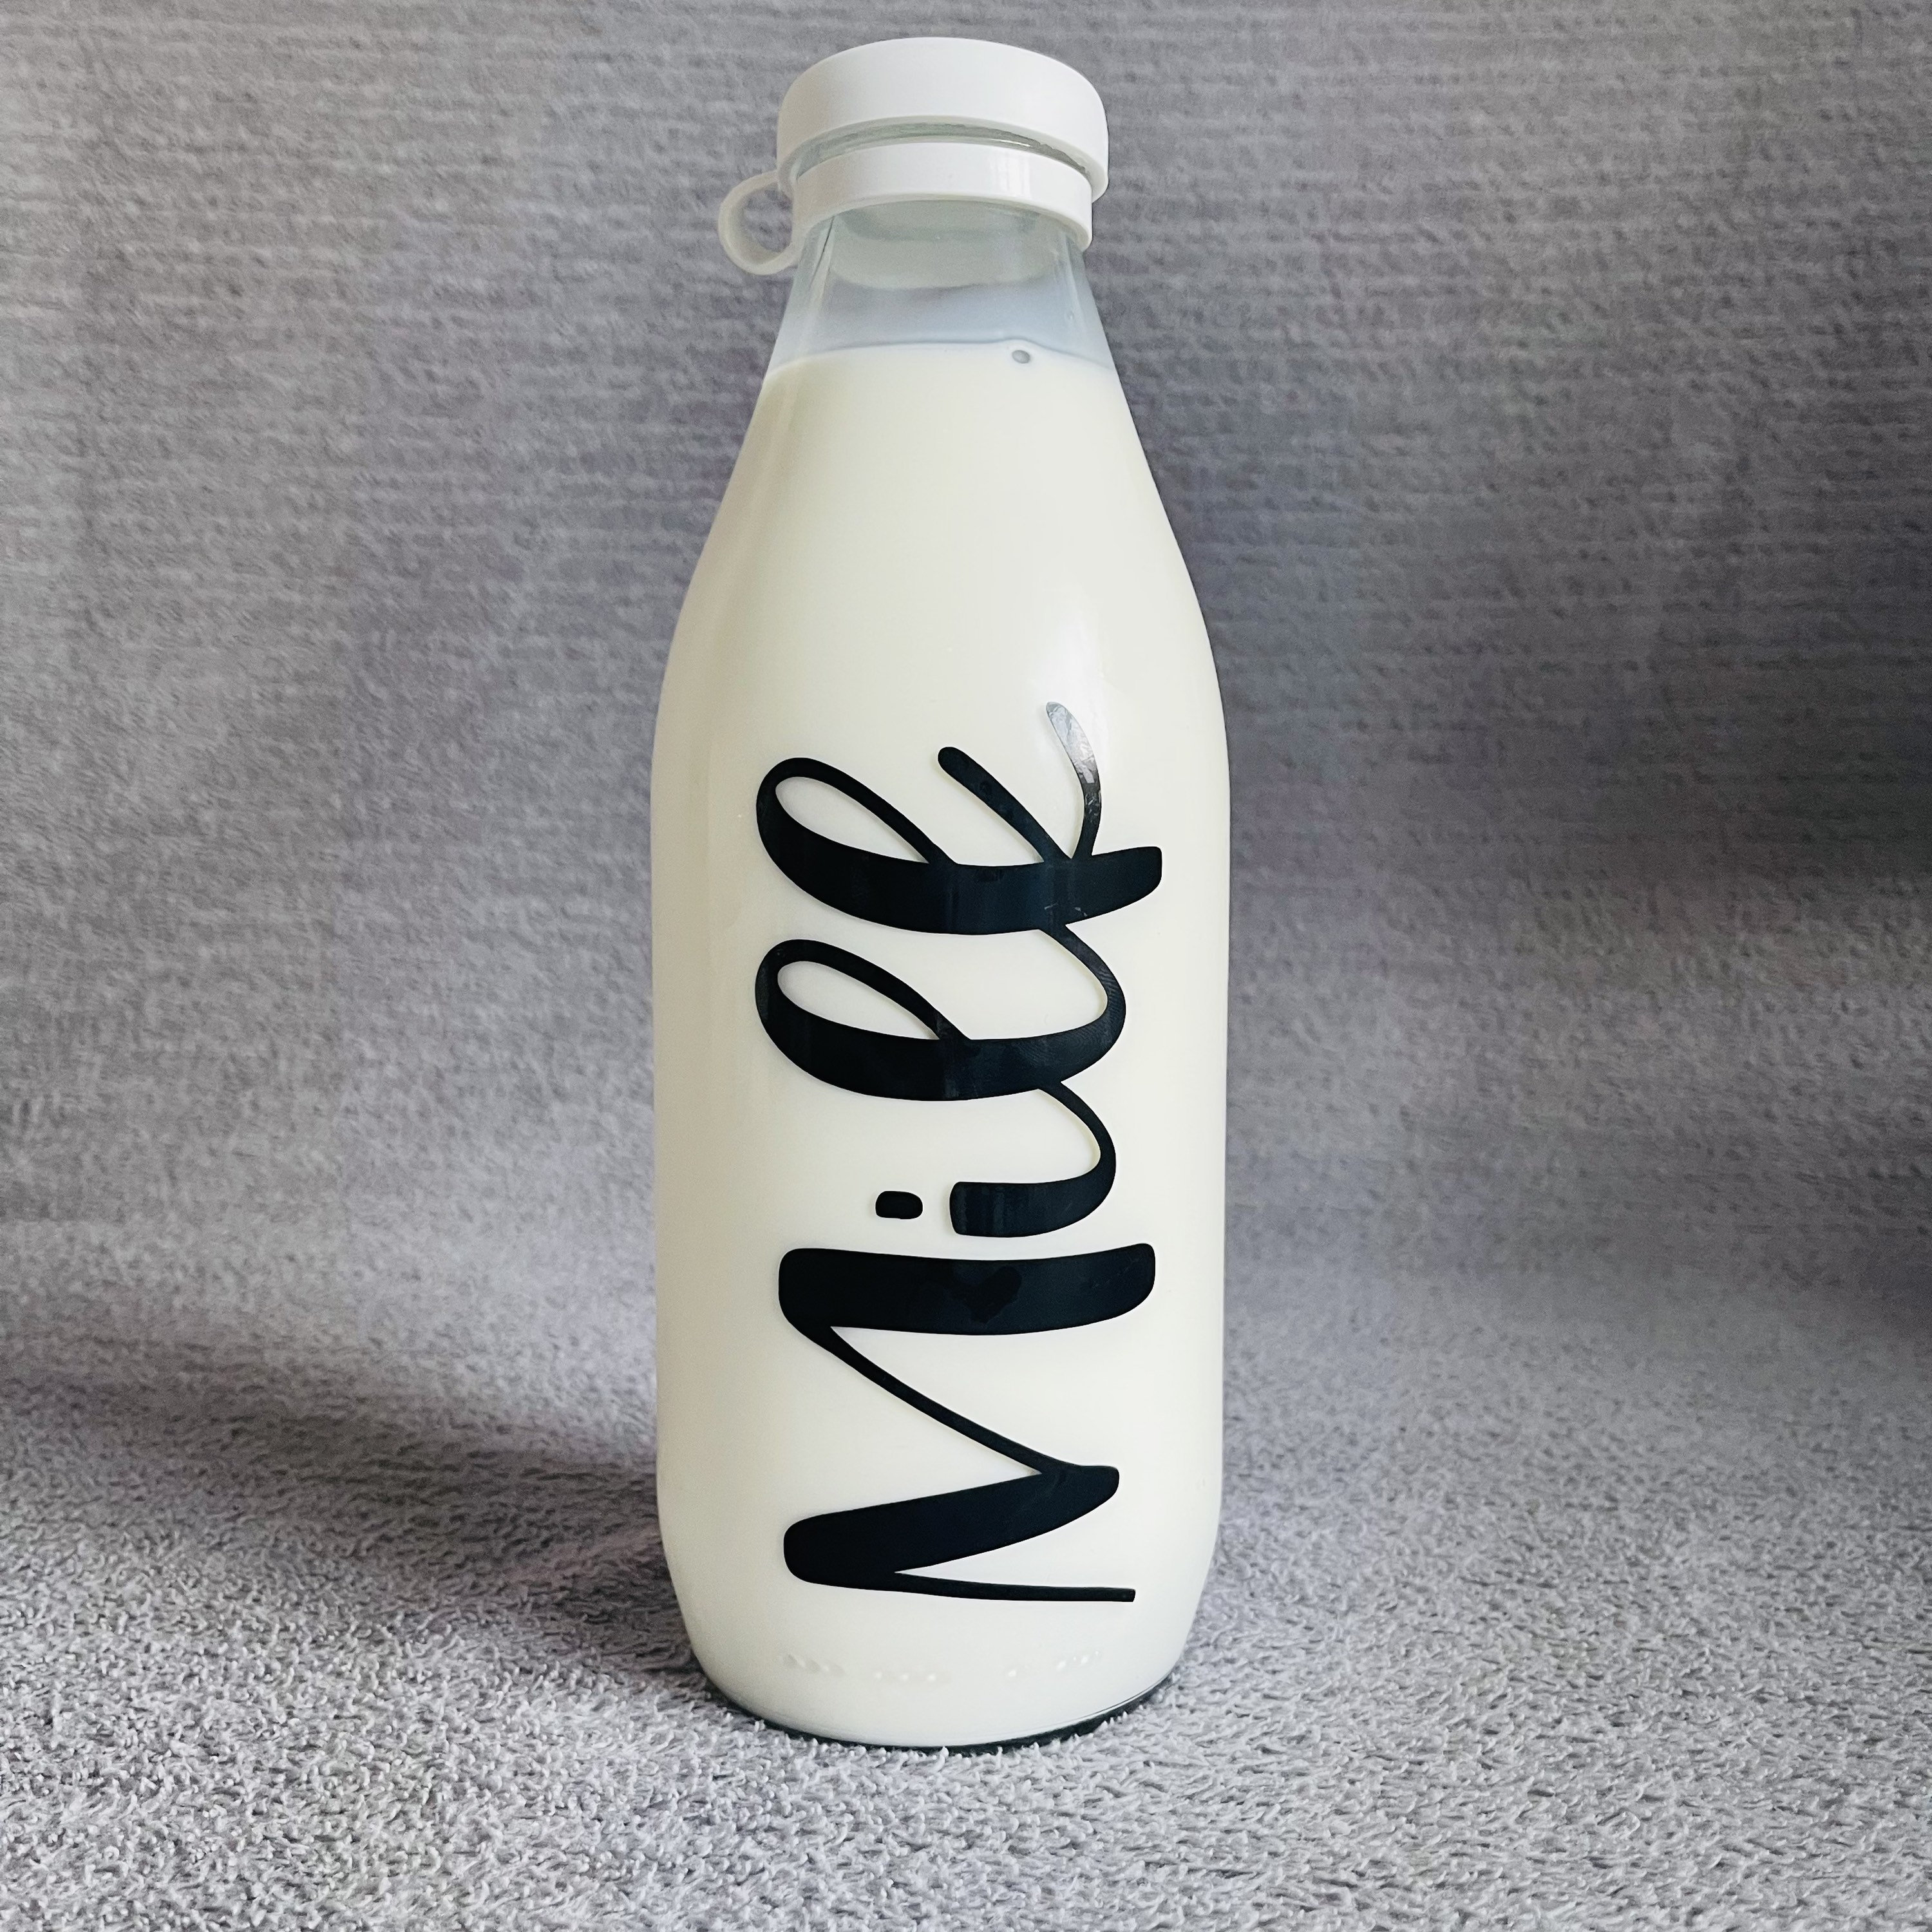 Refillable 1L Glass Milk Bottle With White Waterproof Personalised  Minimalist Label Fridge Organisation Fridgescaping 